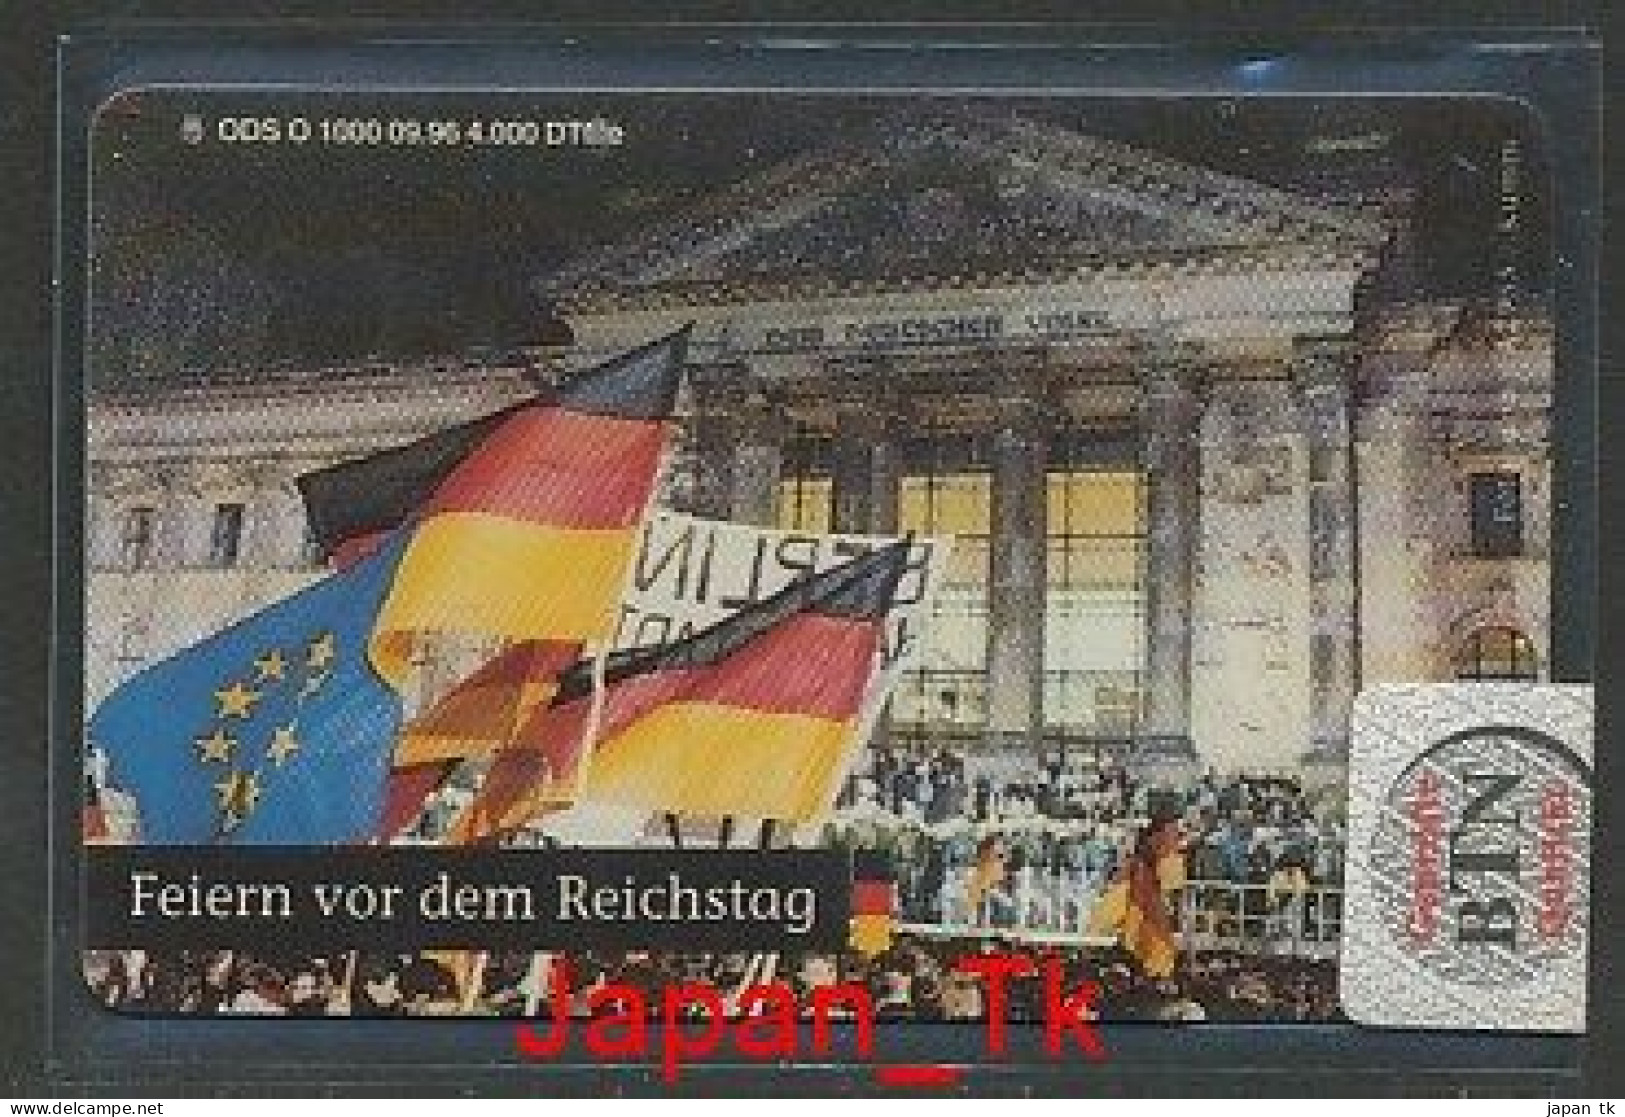 GERMANY O 1000 96 Deutsche Einheit - Aufl 4000 - Siehe Scan - O-Series : Series Clientes Excluidos Servicio De Colección